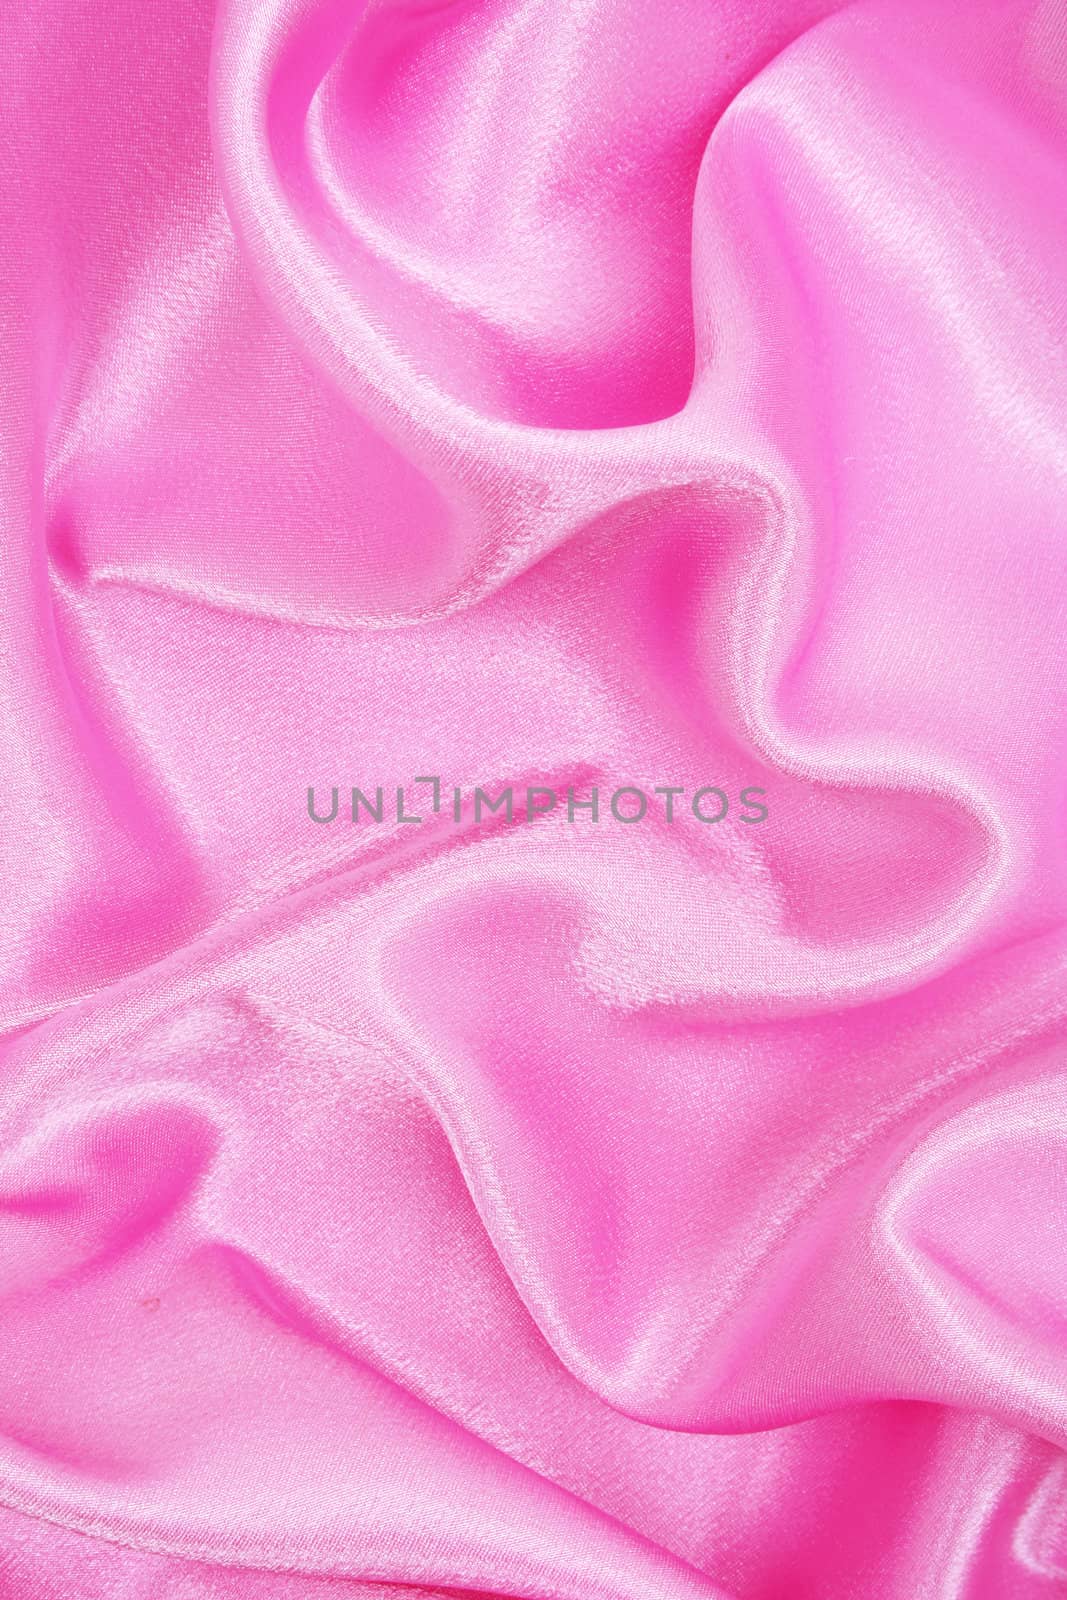 Smooth elegant pink silk by oxanatravel